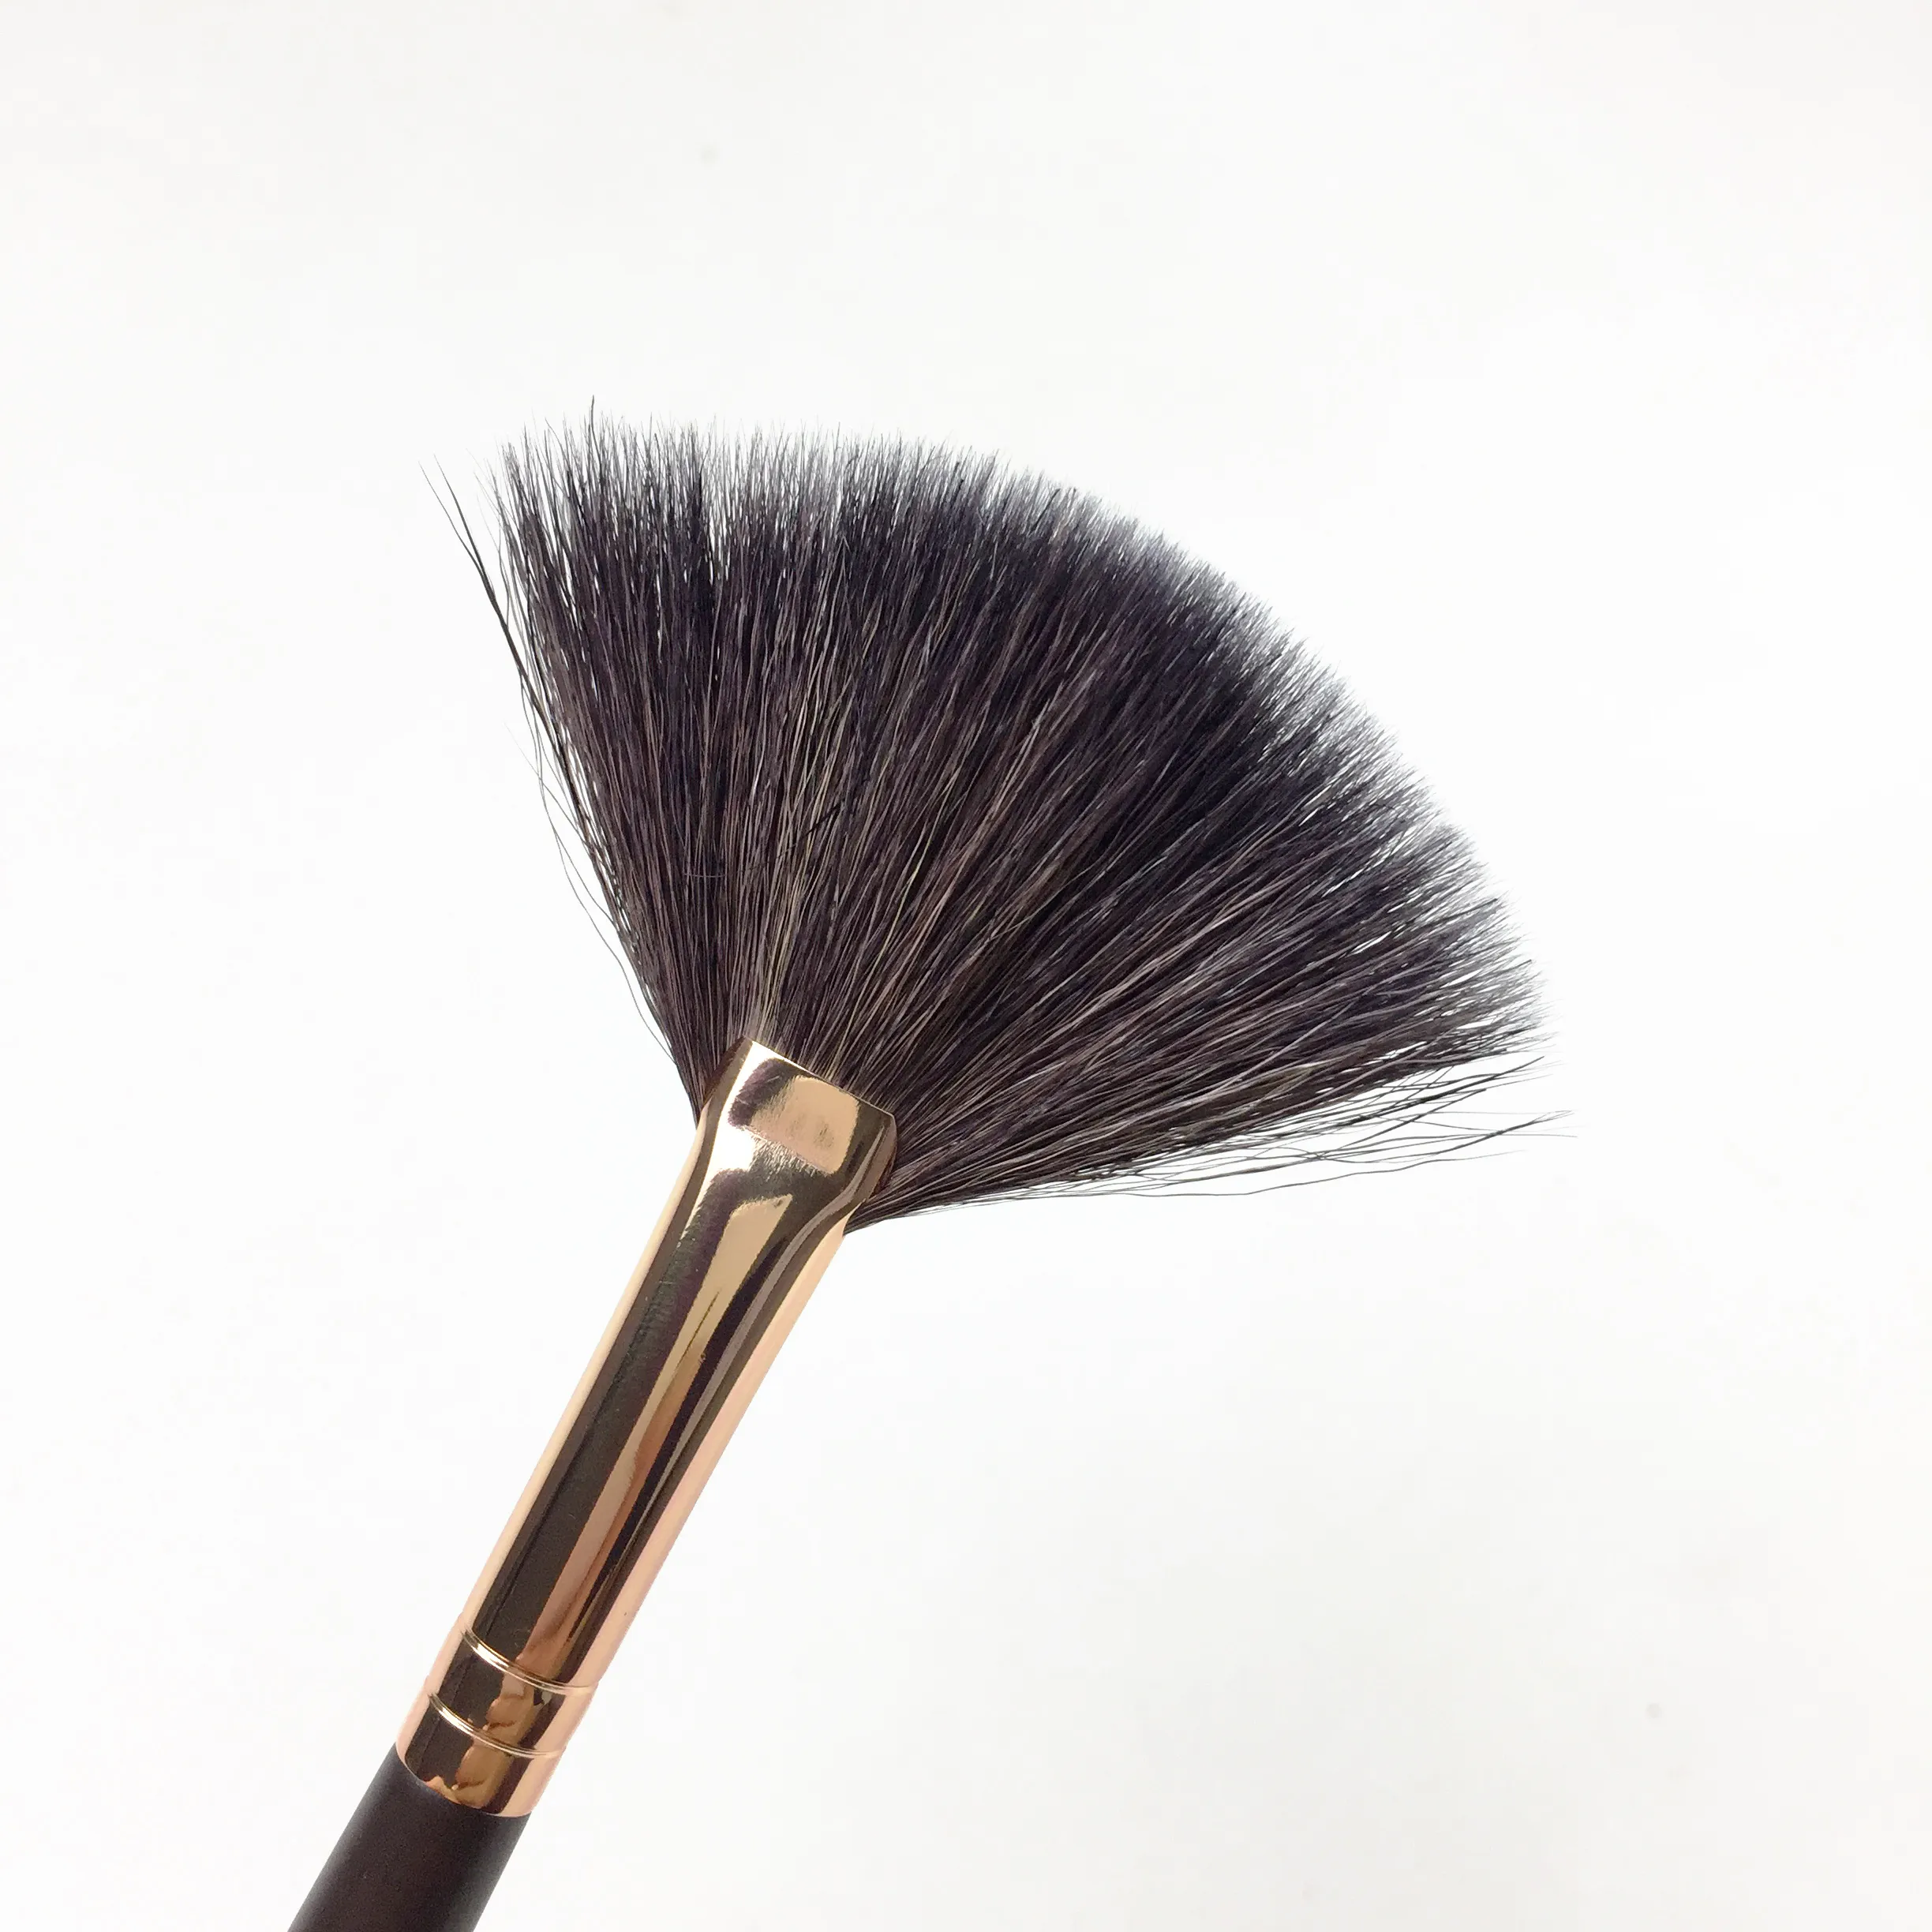 My Destiny 051 Pro Fan Brush - Badger Hair Expertly Finish Powder Brush - Quality Makeup Brushes Blender Applicator